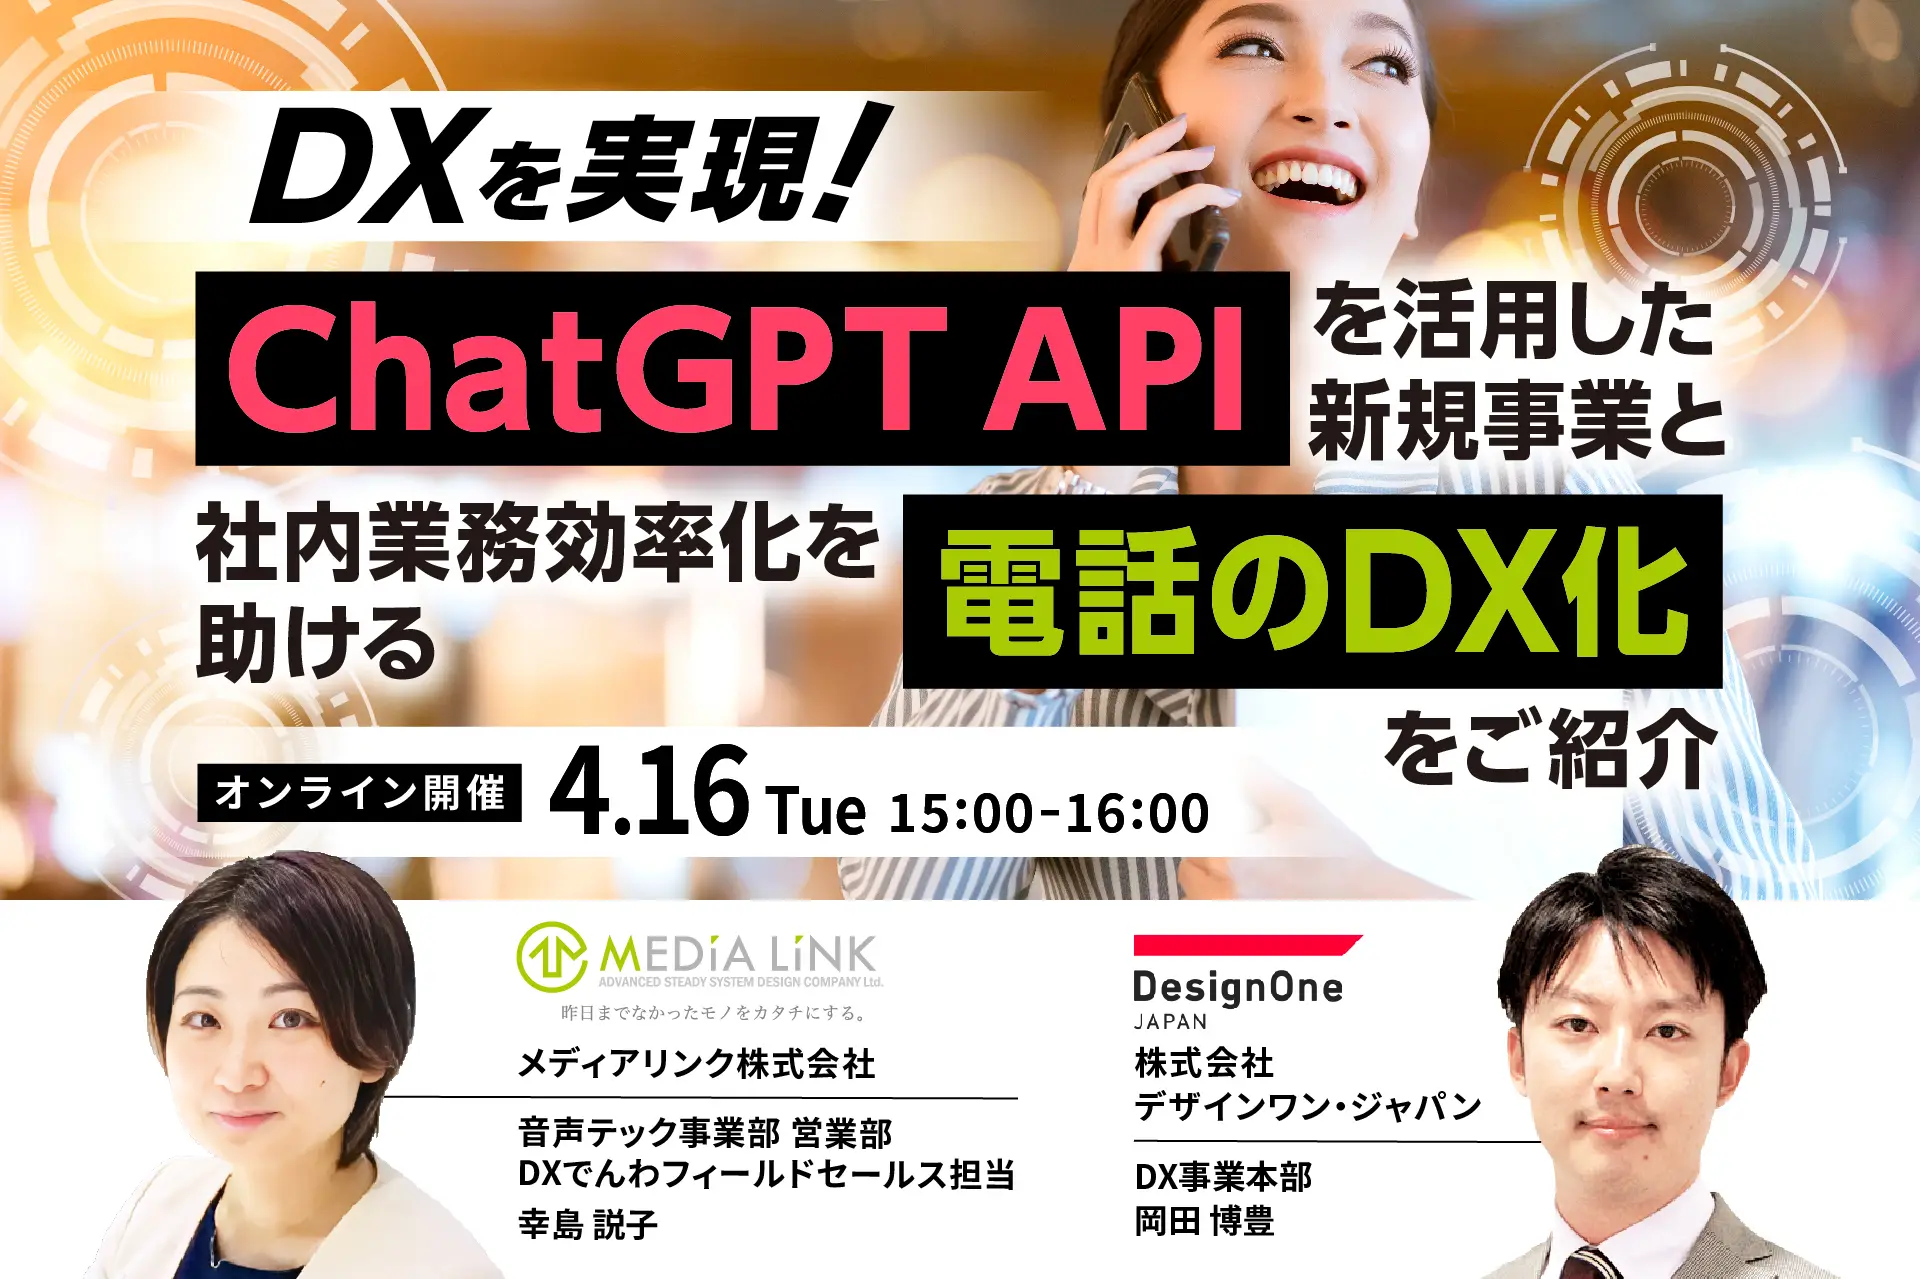 DXを実現！ChatGPT APIを活用した新規事業と社内業務効率化を助ける電話のDX化をご紹介